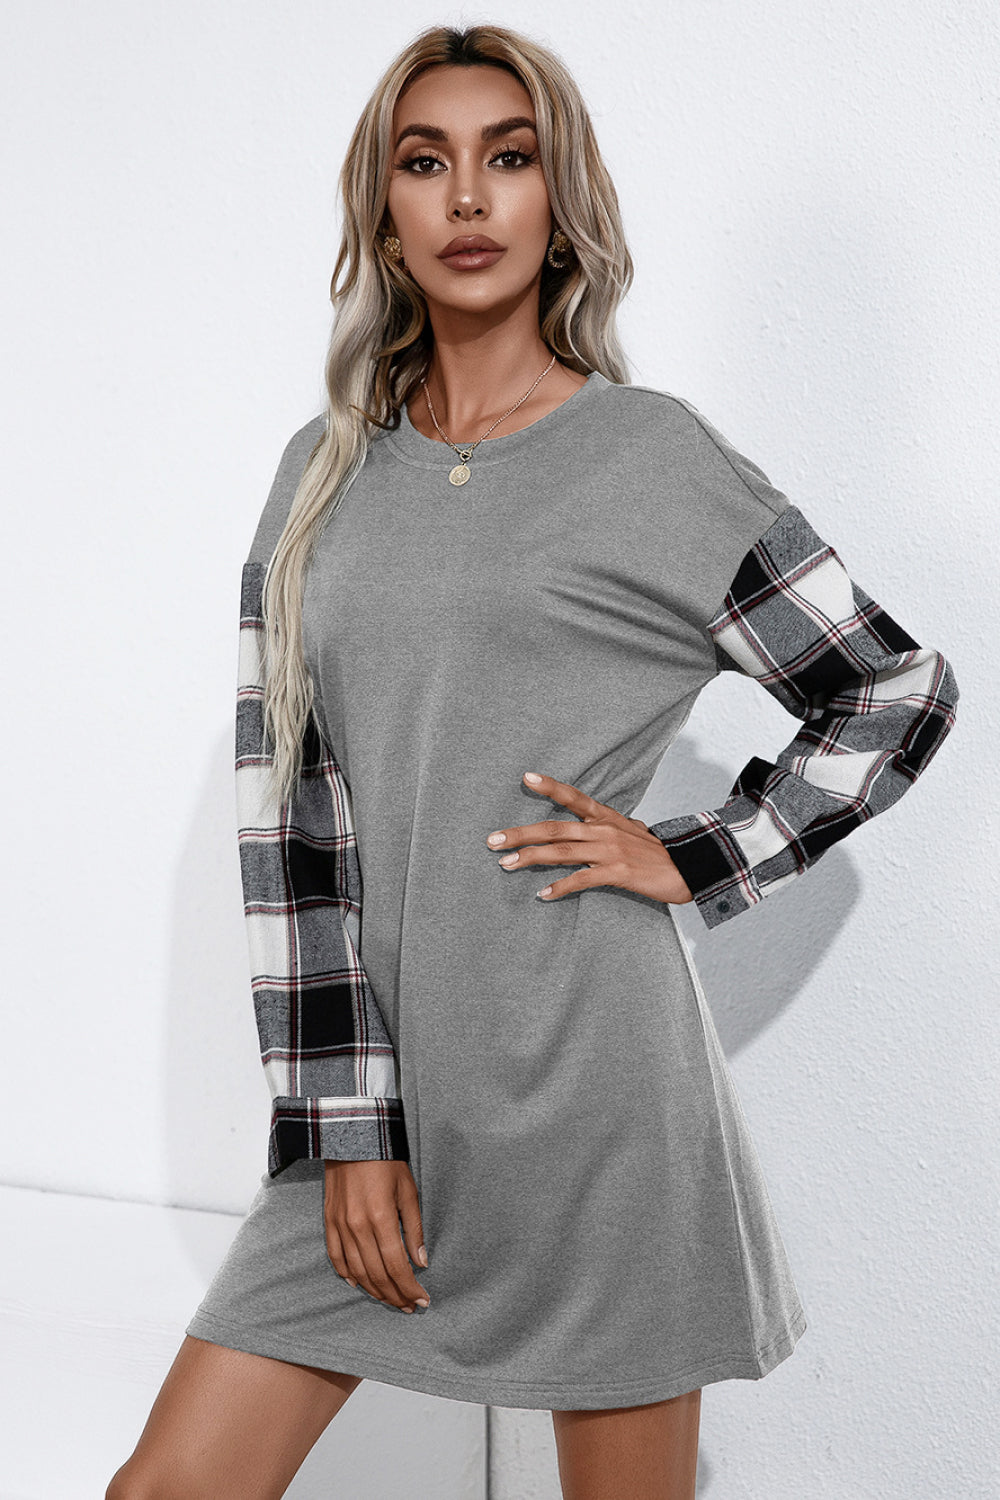 Plaid Sleeve Contrast T-Shirt Dress  | KIKI COUTURE-Women's Clothing, Designer Fashions, Shoes, Bags